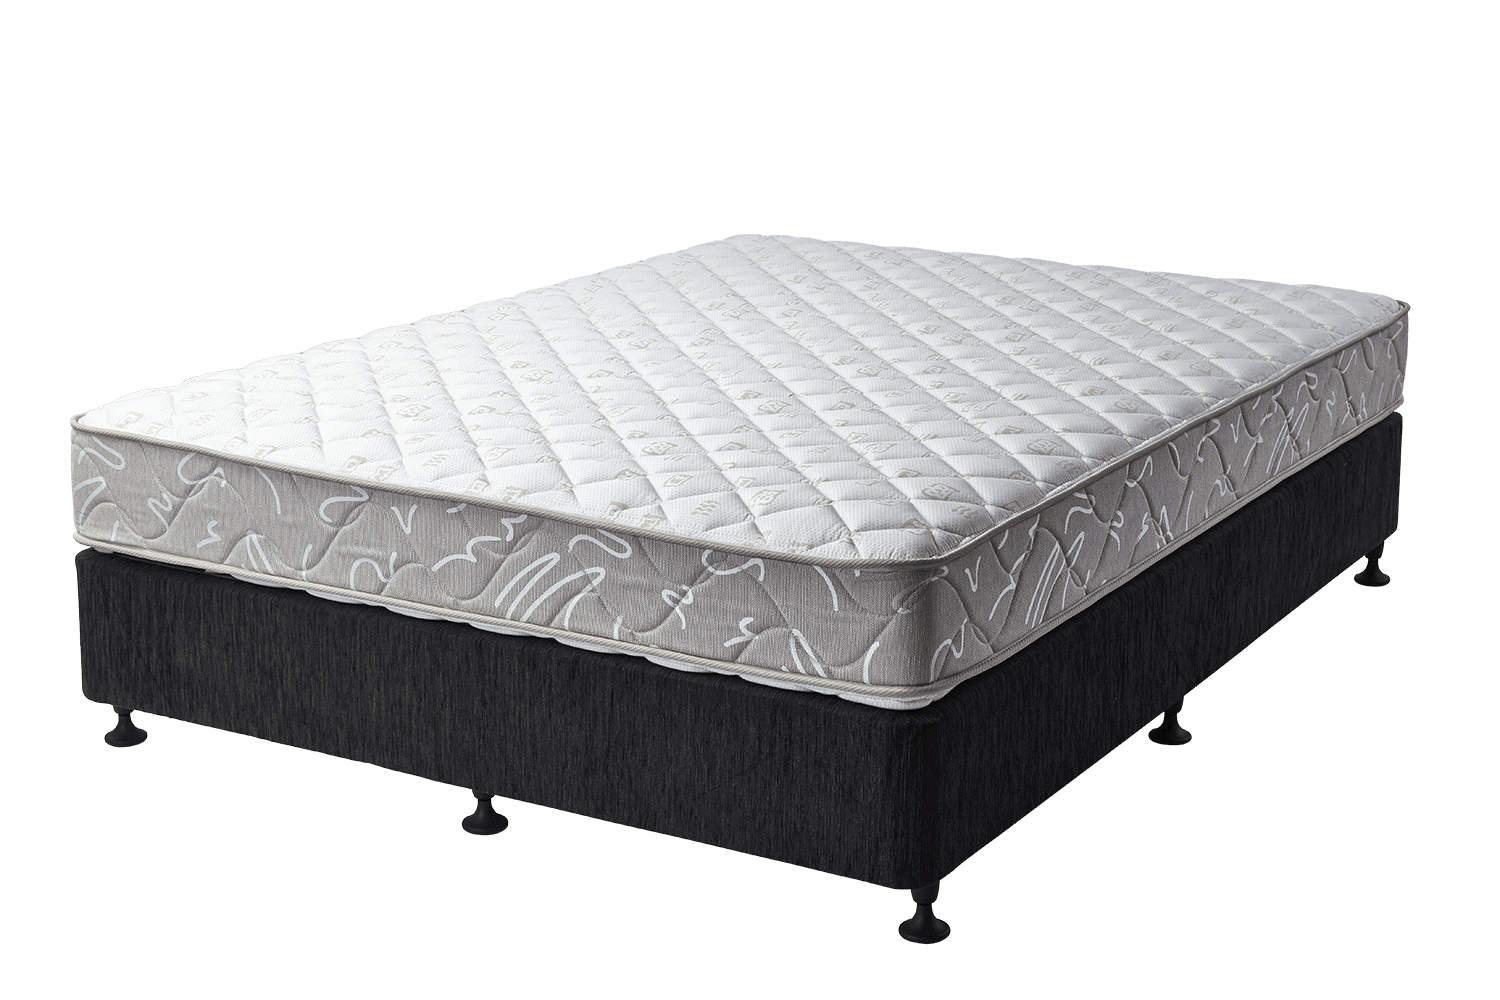 makin mattresses allure mattress queen single super king double size